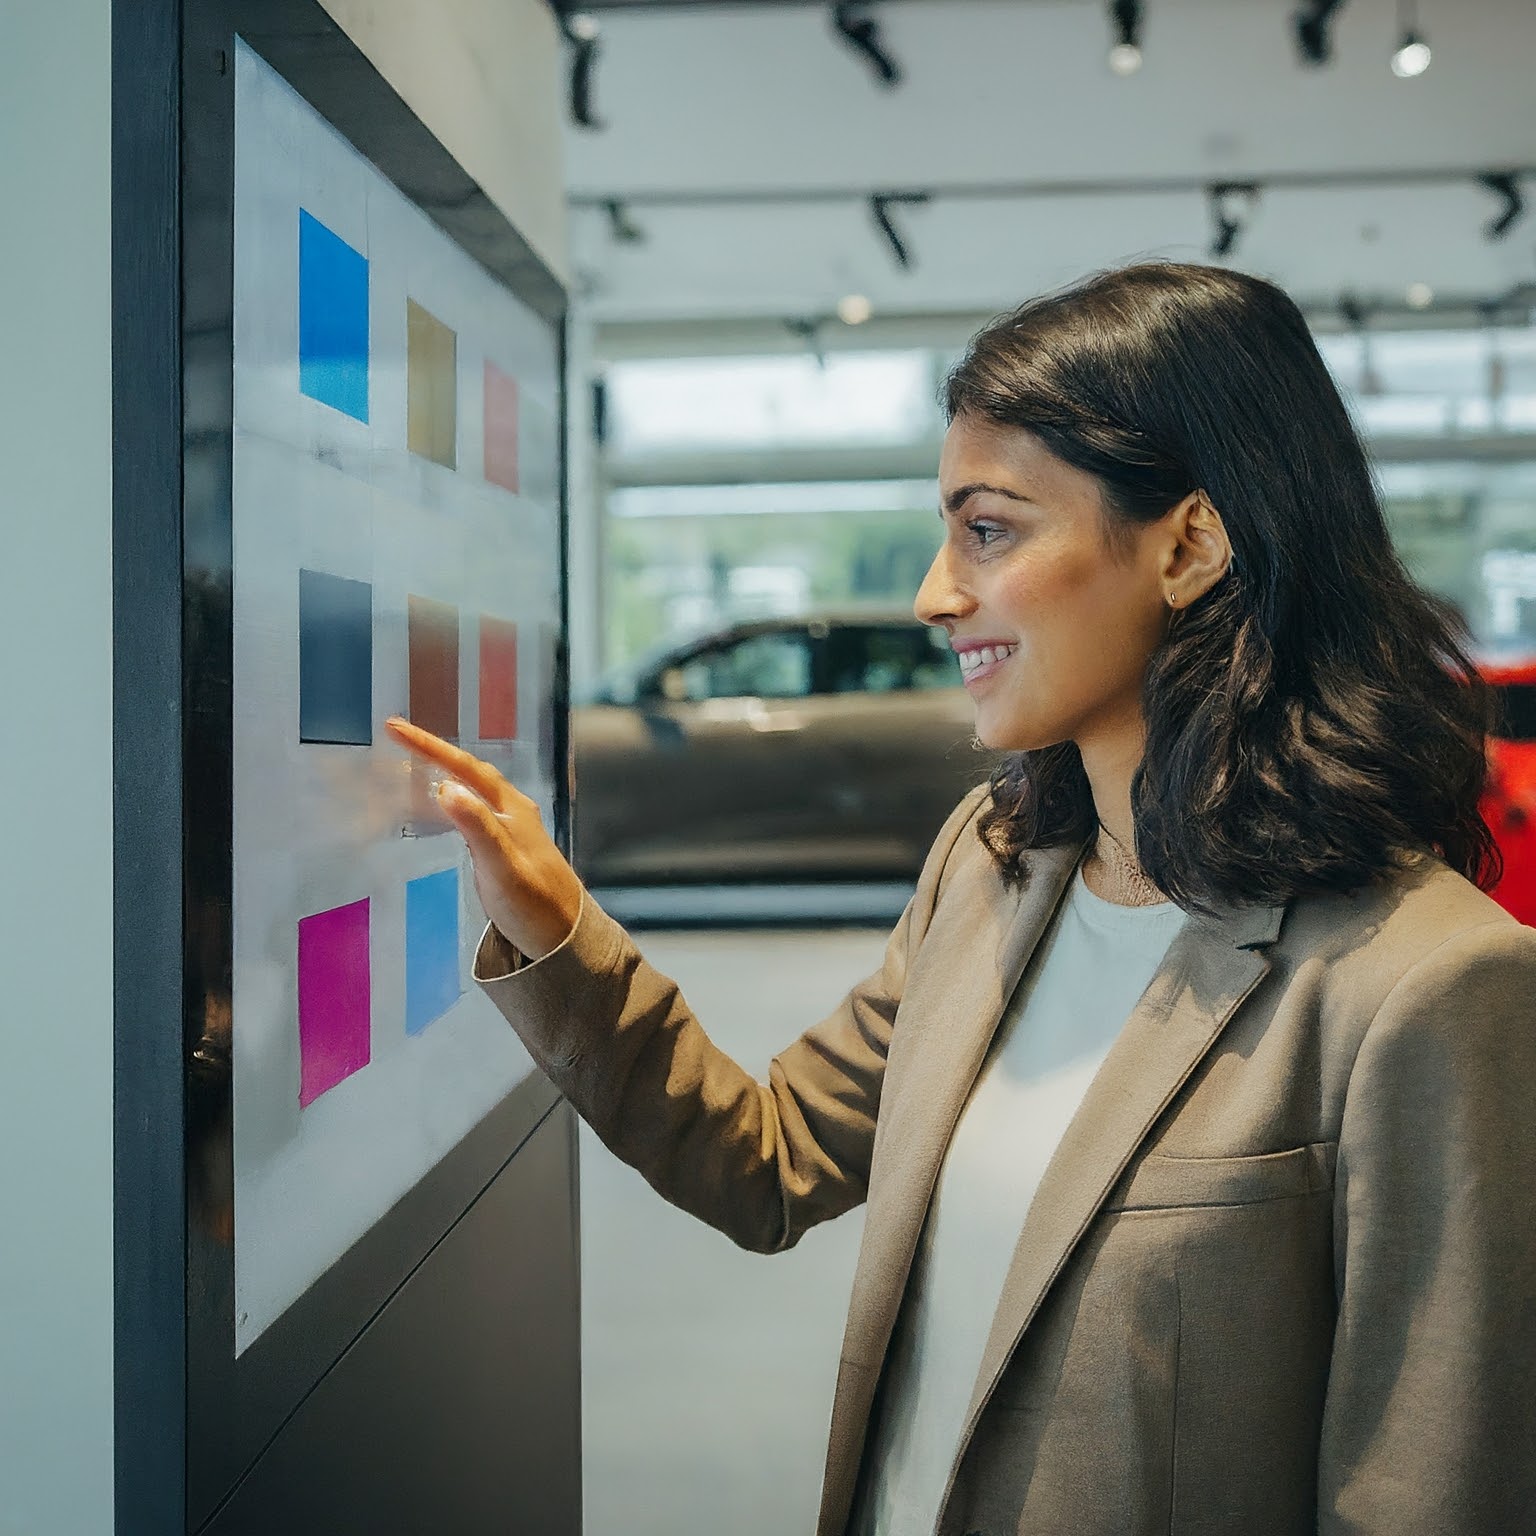 Car shopping experience with digital kiosk